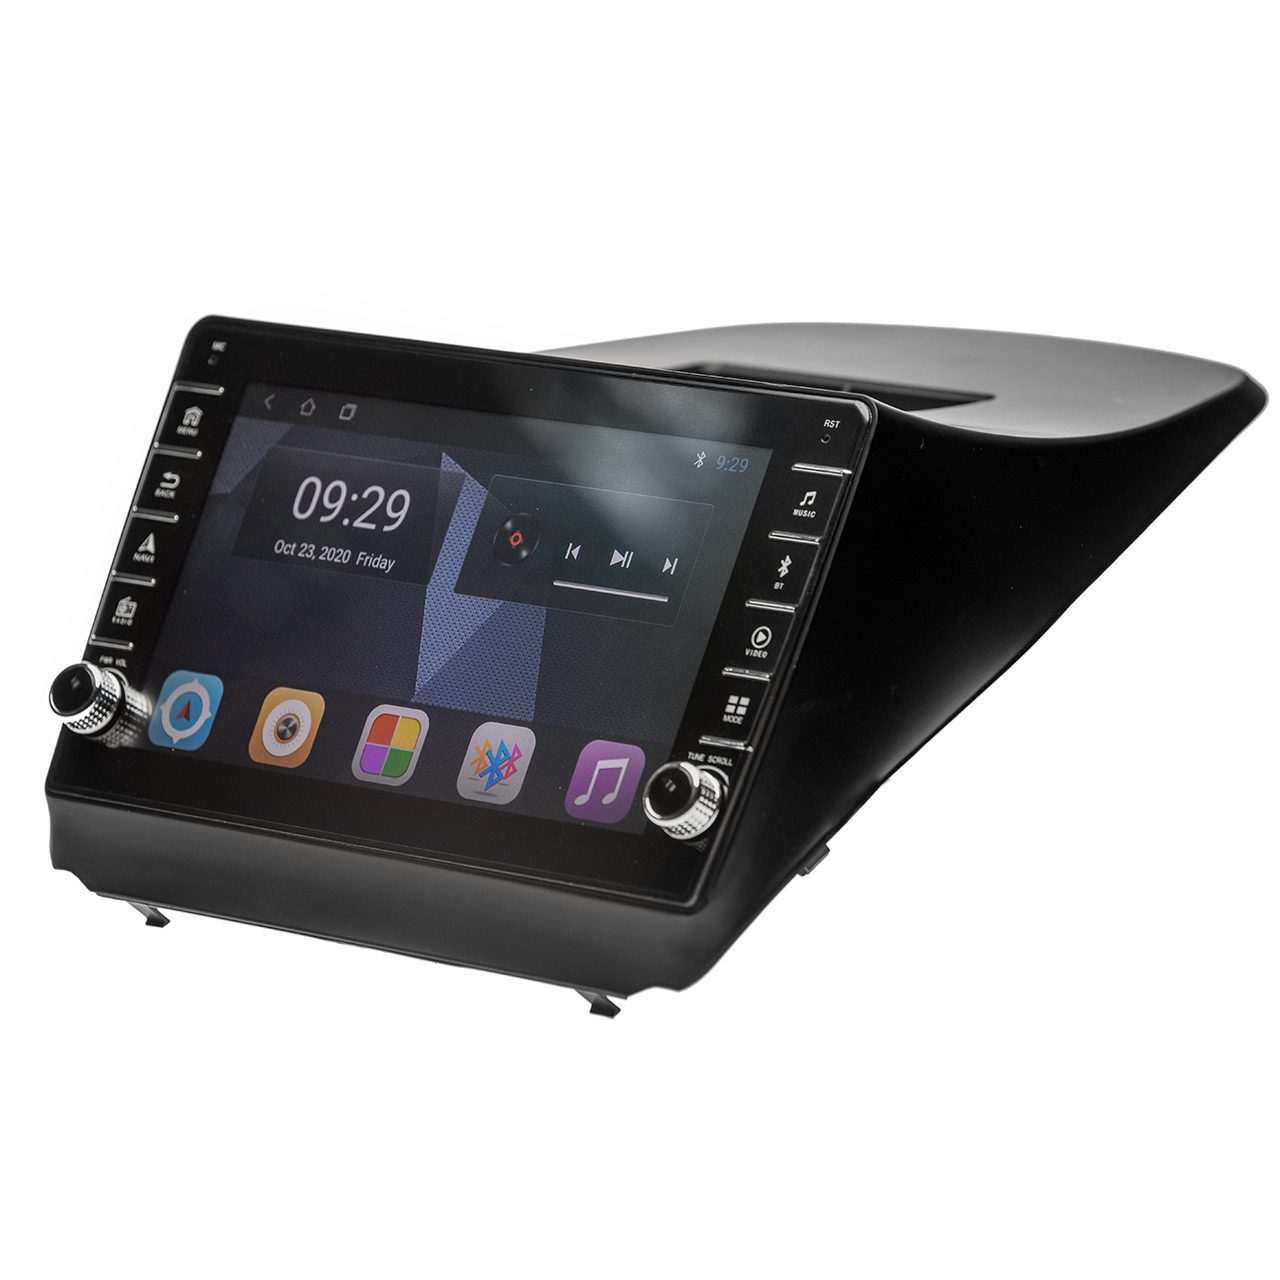 Navigatie AUTONAV Android GPS Dedicata Hyundai Tucson ix35 2009-2015, Model PRO Memorie 32GB Stocare, 2GB DDR3 RAM, Butoane Laterale Si Regulator Volum, Display 8